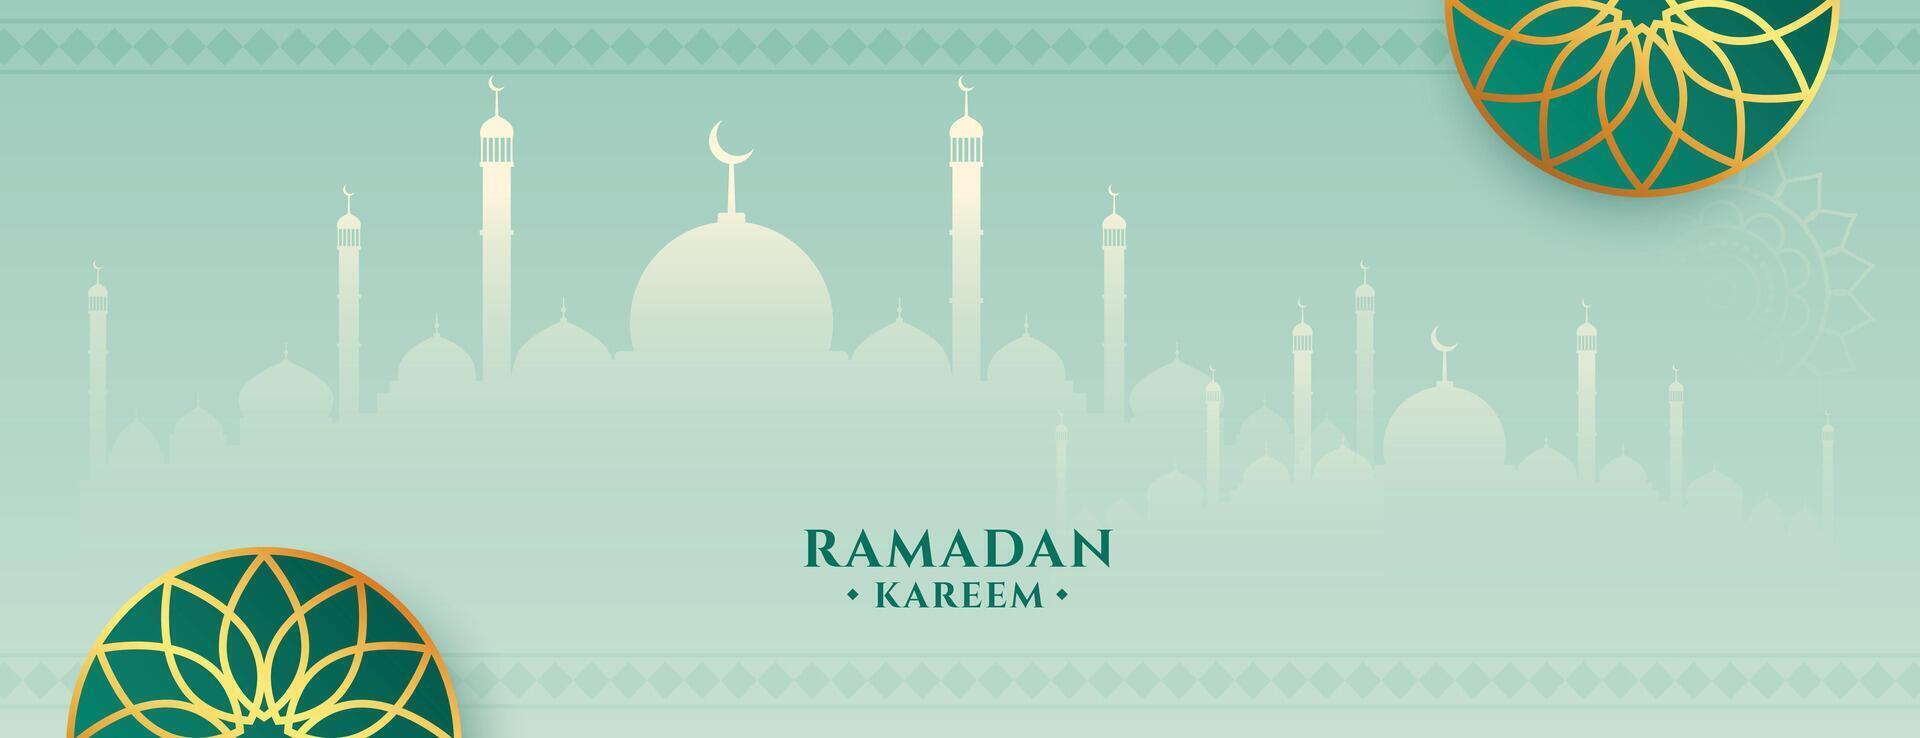 islamico Ramadan kareem eid Festival bandiera design vettore